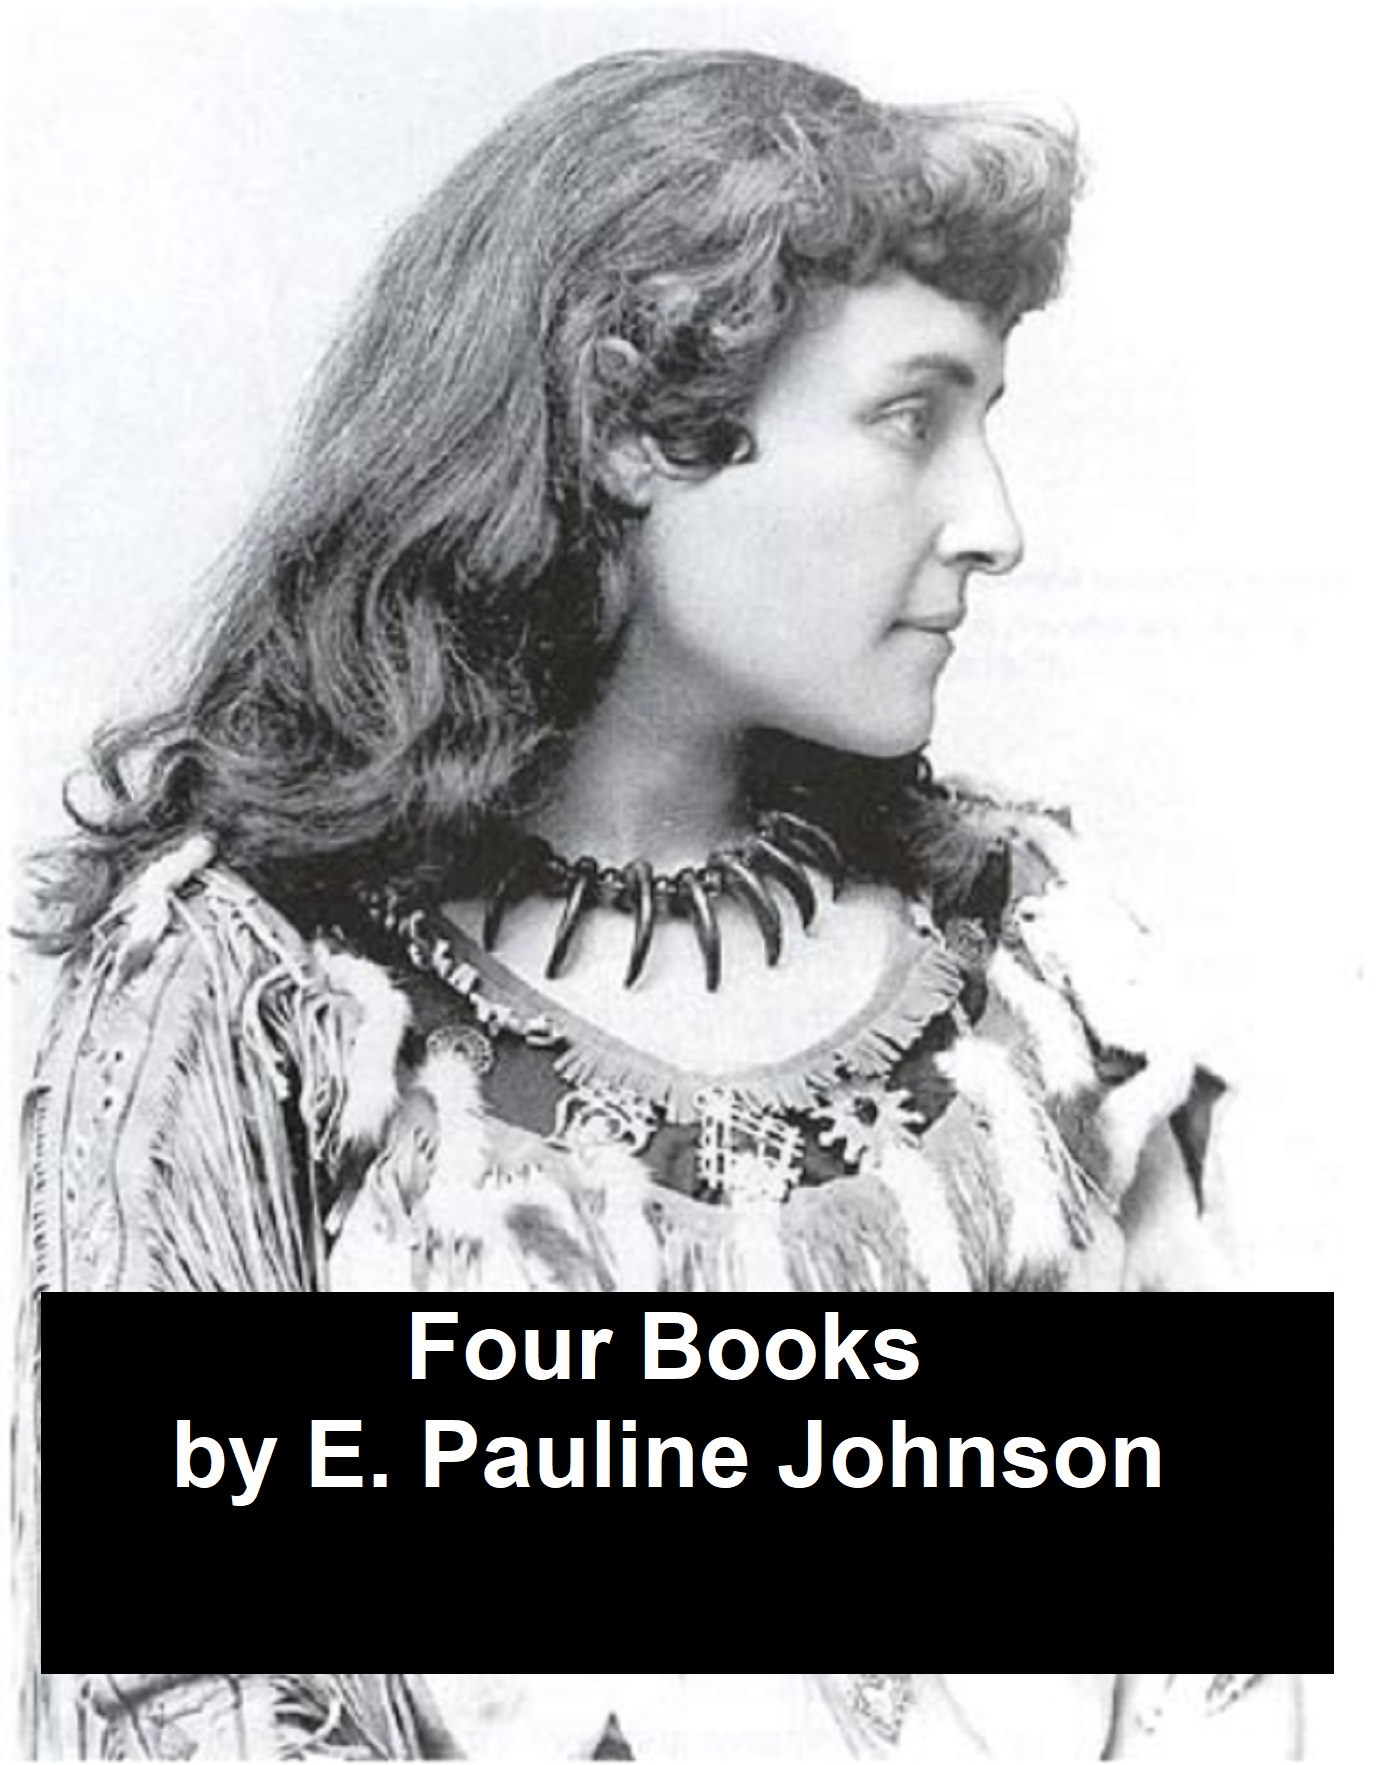 E. Pauline Johnson